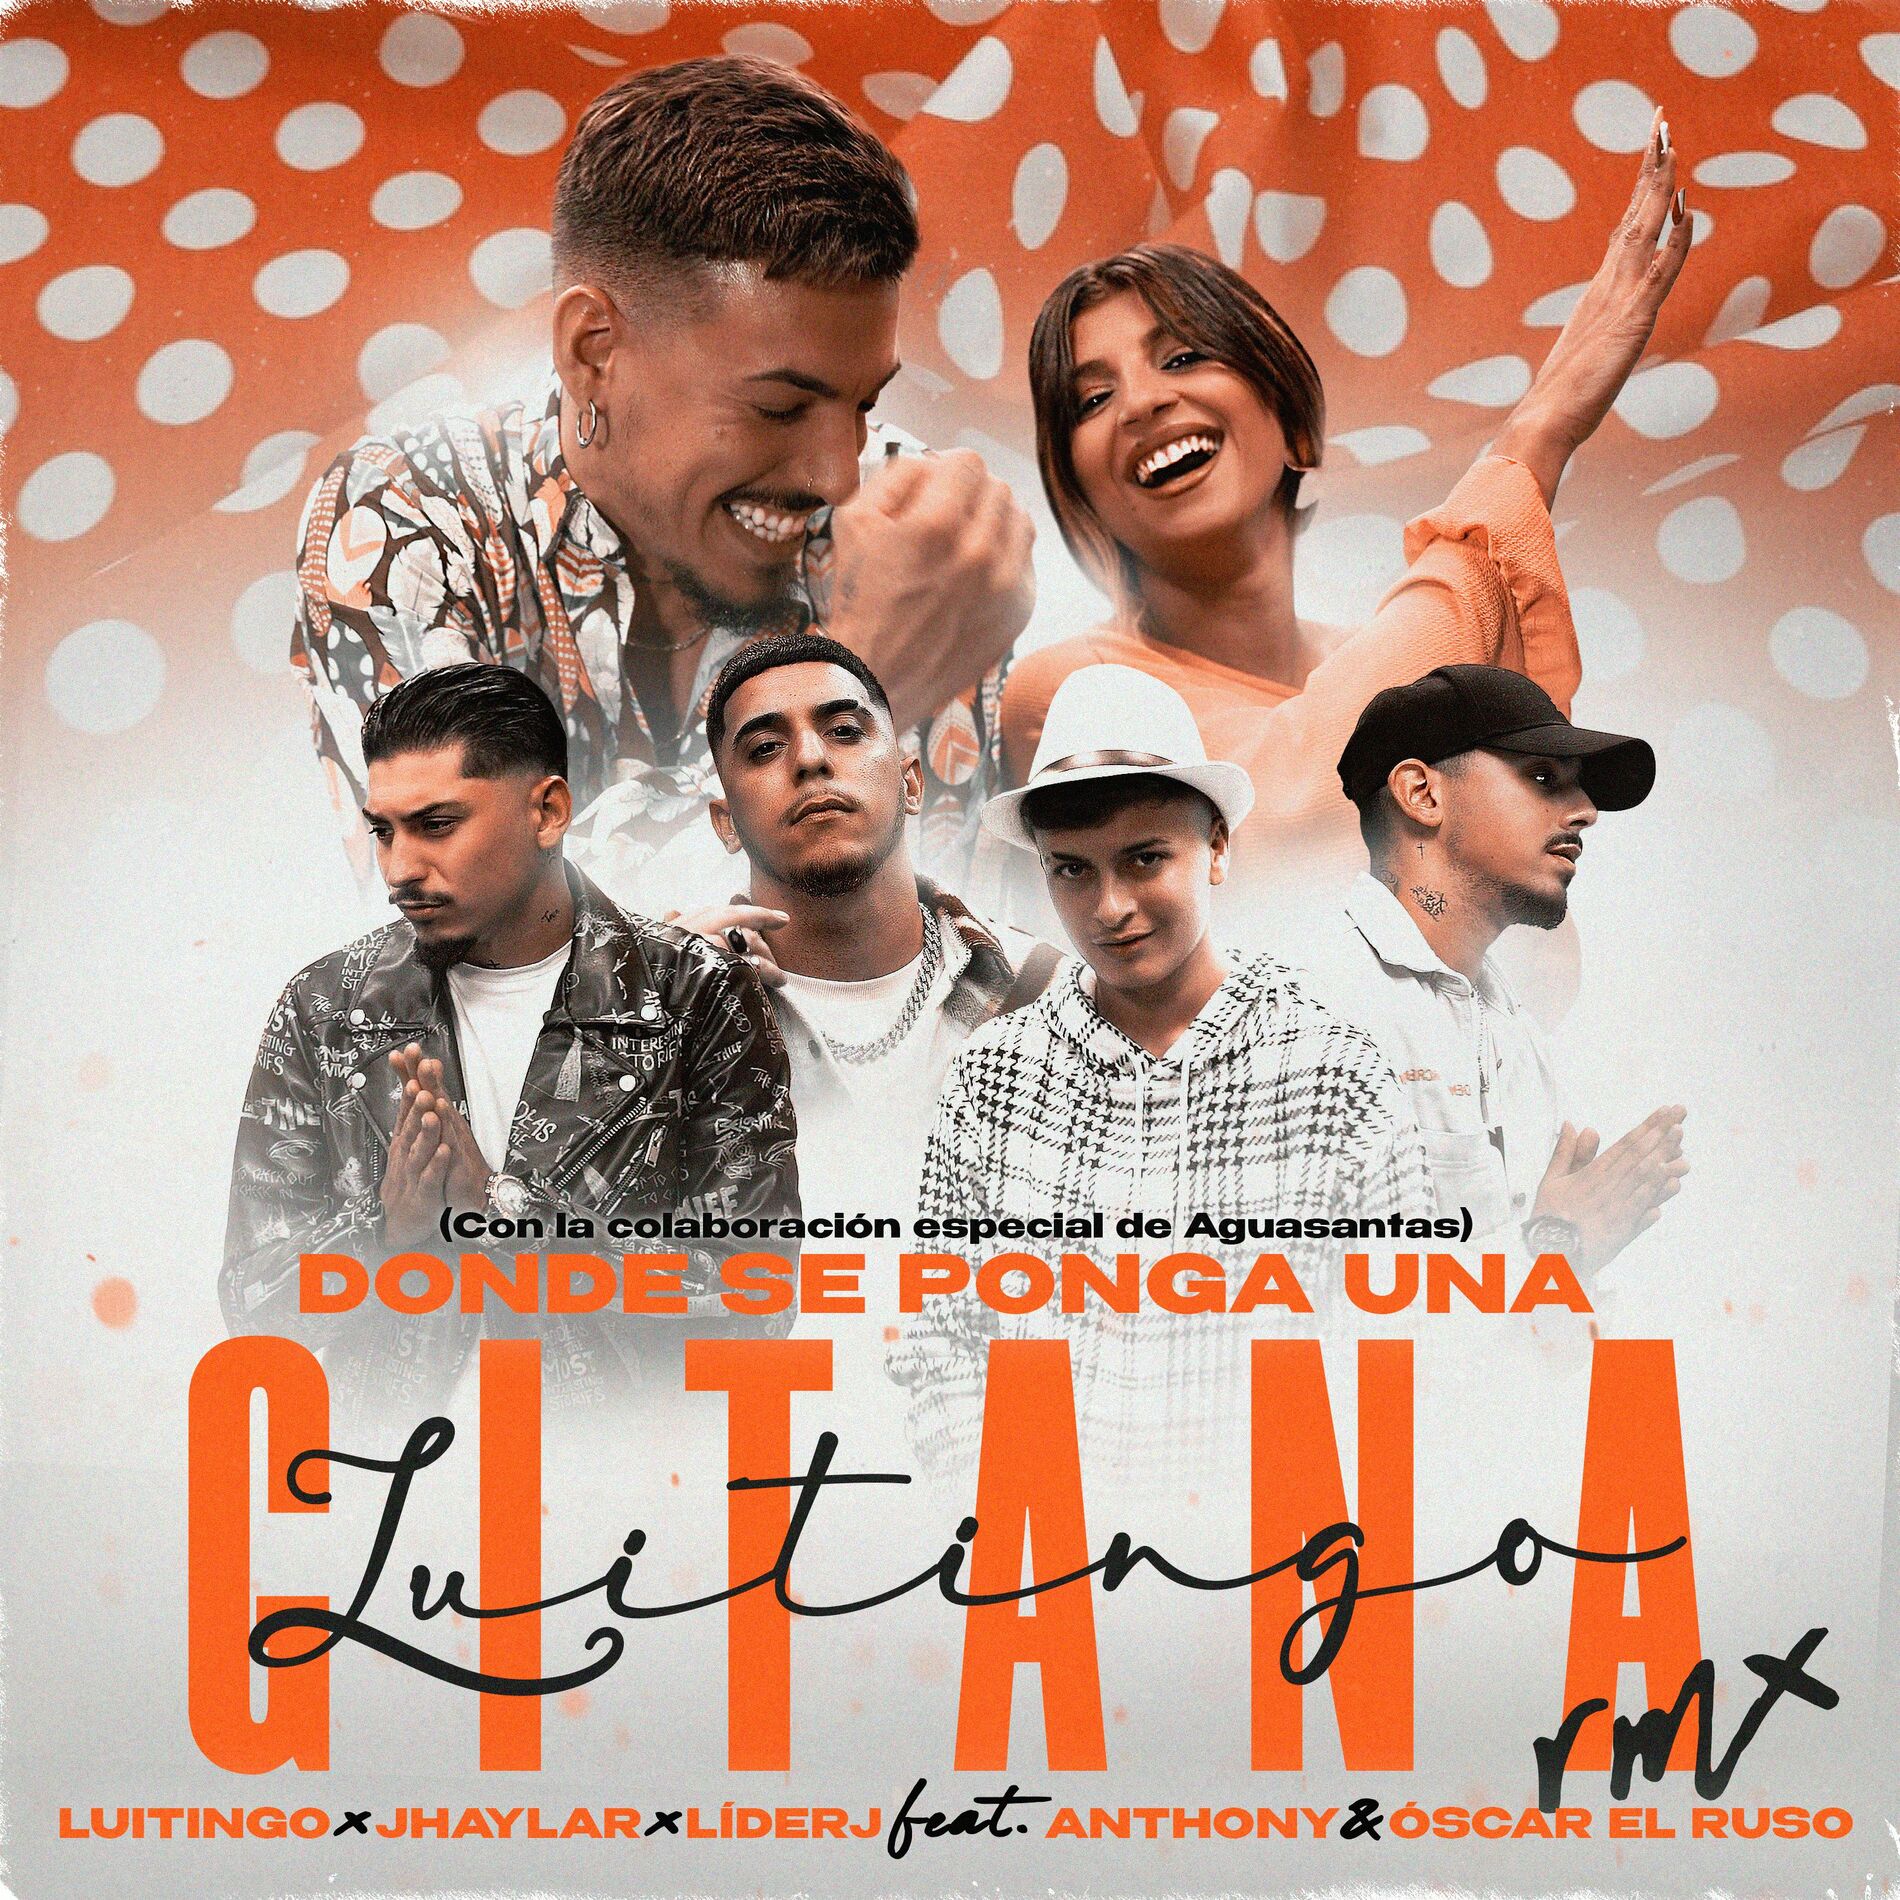 Luitingo - Donde Se Ponga una Gitana (Remix): lyrics and songs | Deezer